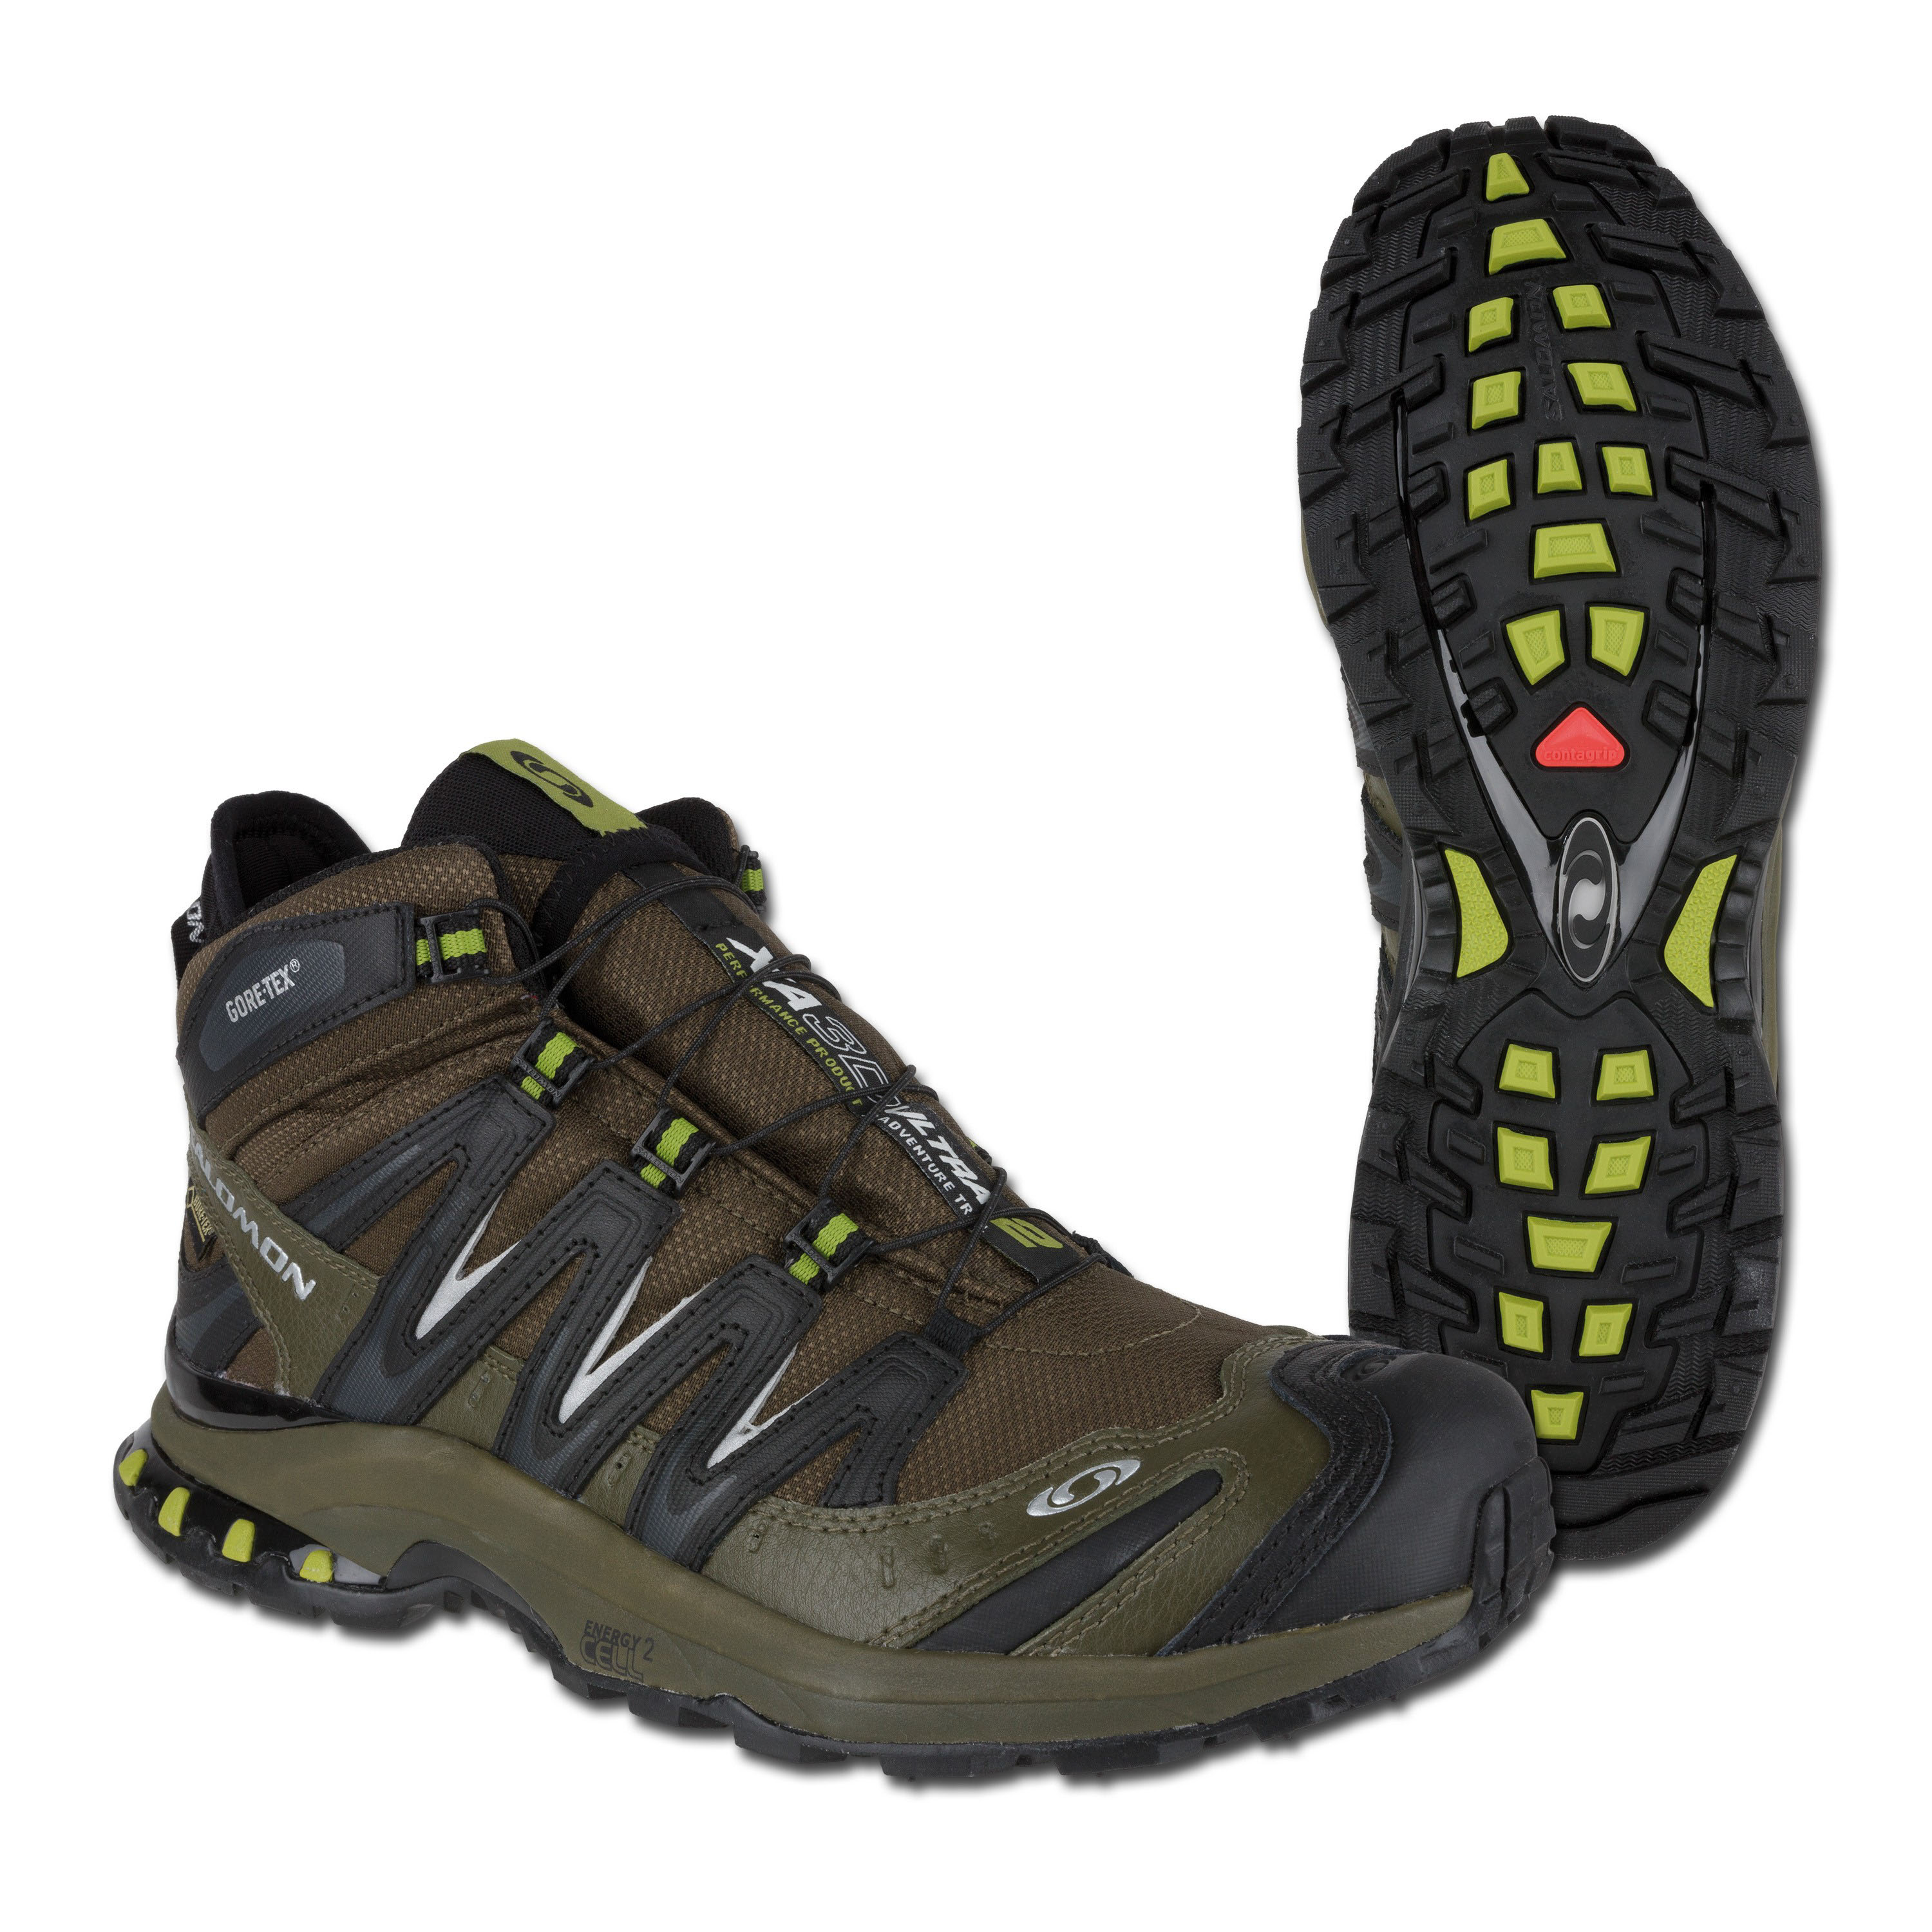 Salomon Shoe XA Pro 3D Mid LTR GTX Bayou Green | Salomon Shoe XA Pro 3D Mid LTR Bayou Green | Hiking Shoes | Shoes | Footwear | Clothing